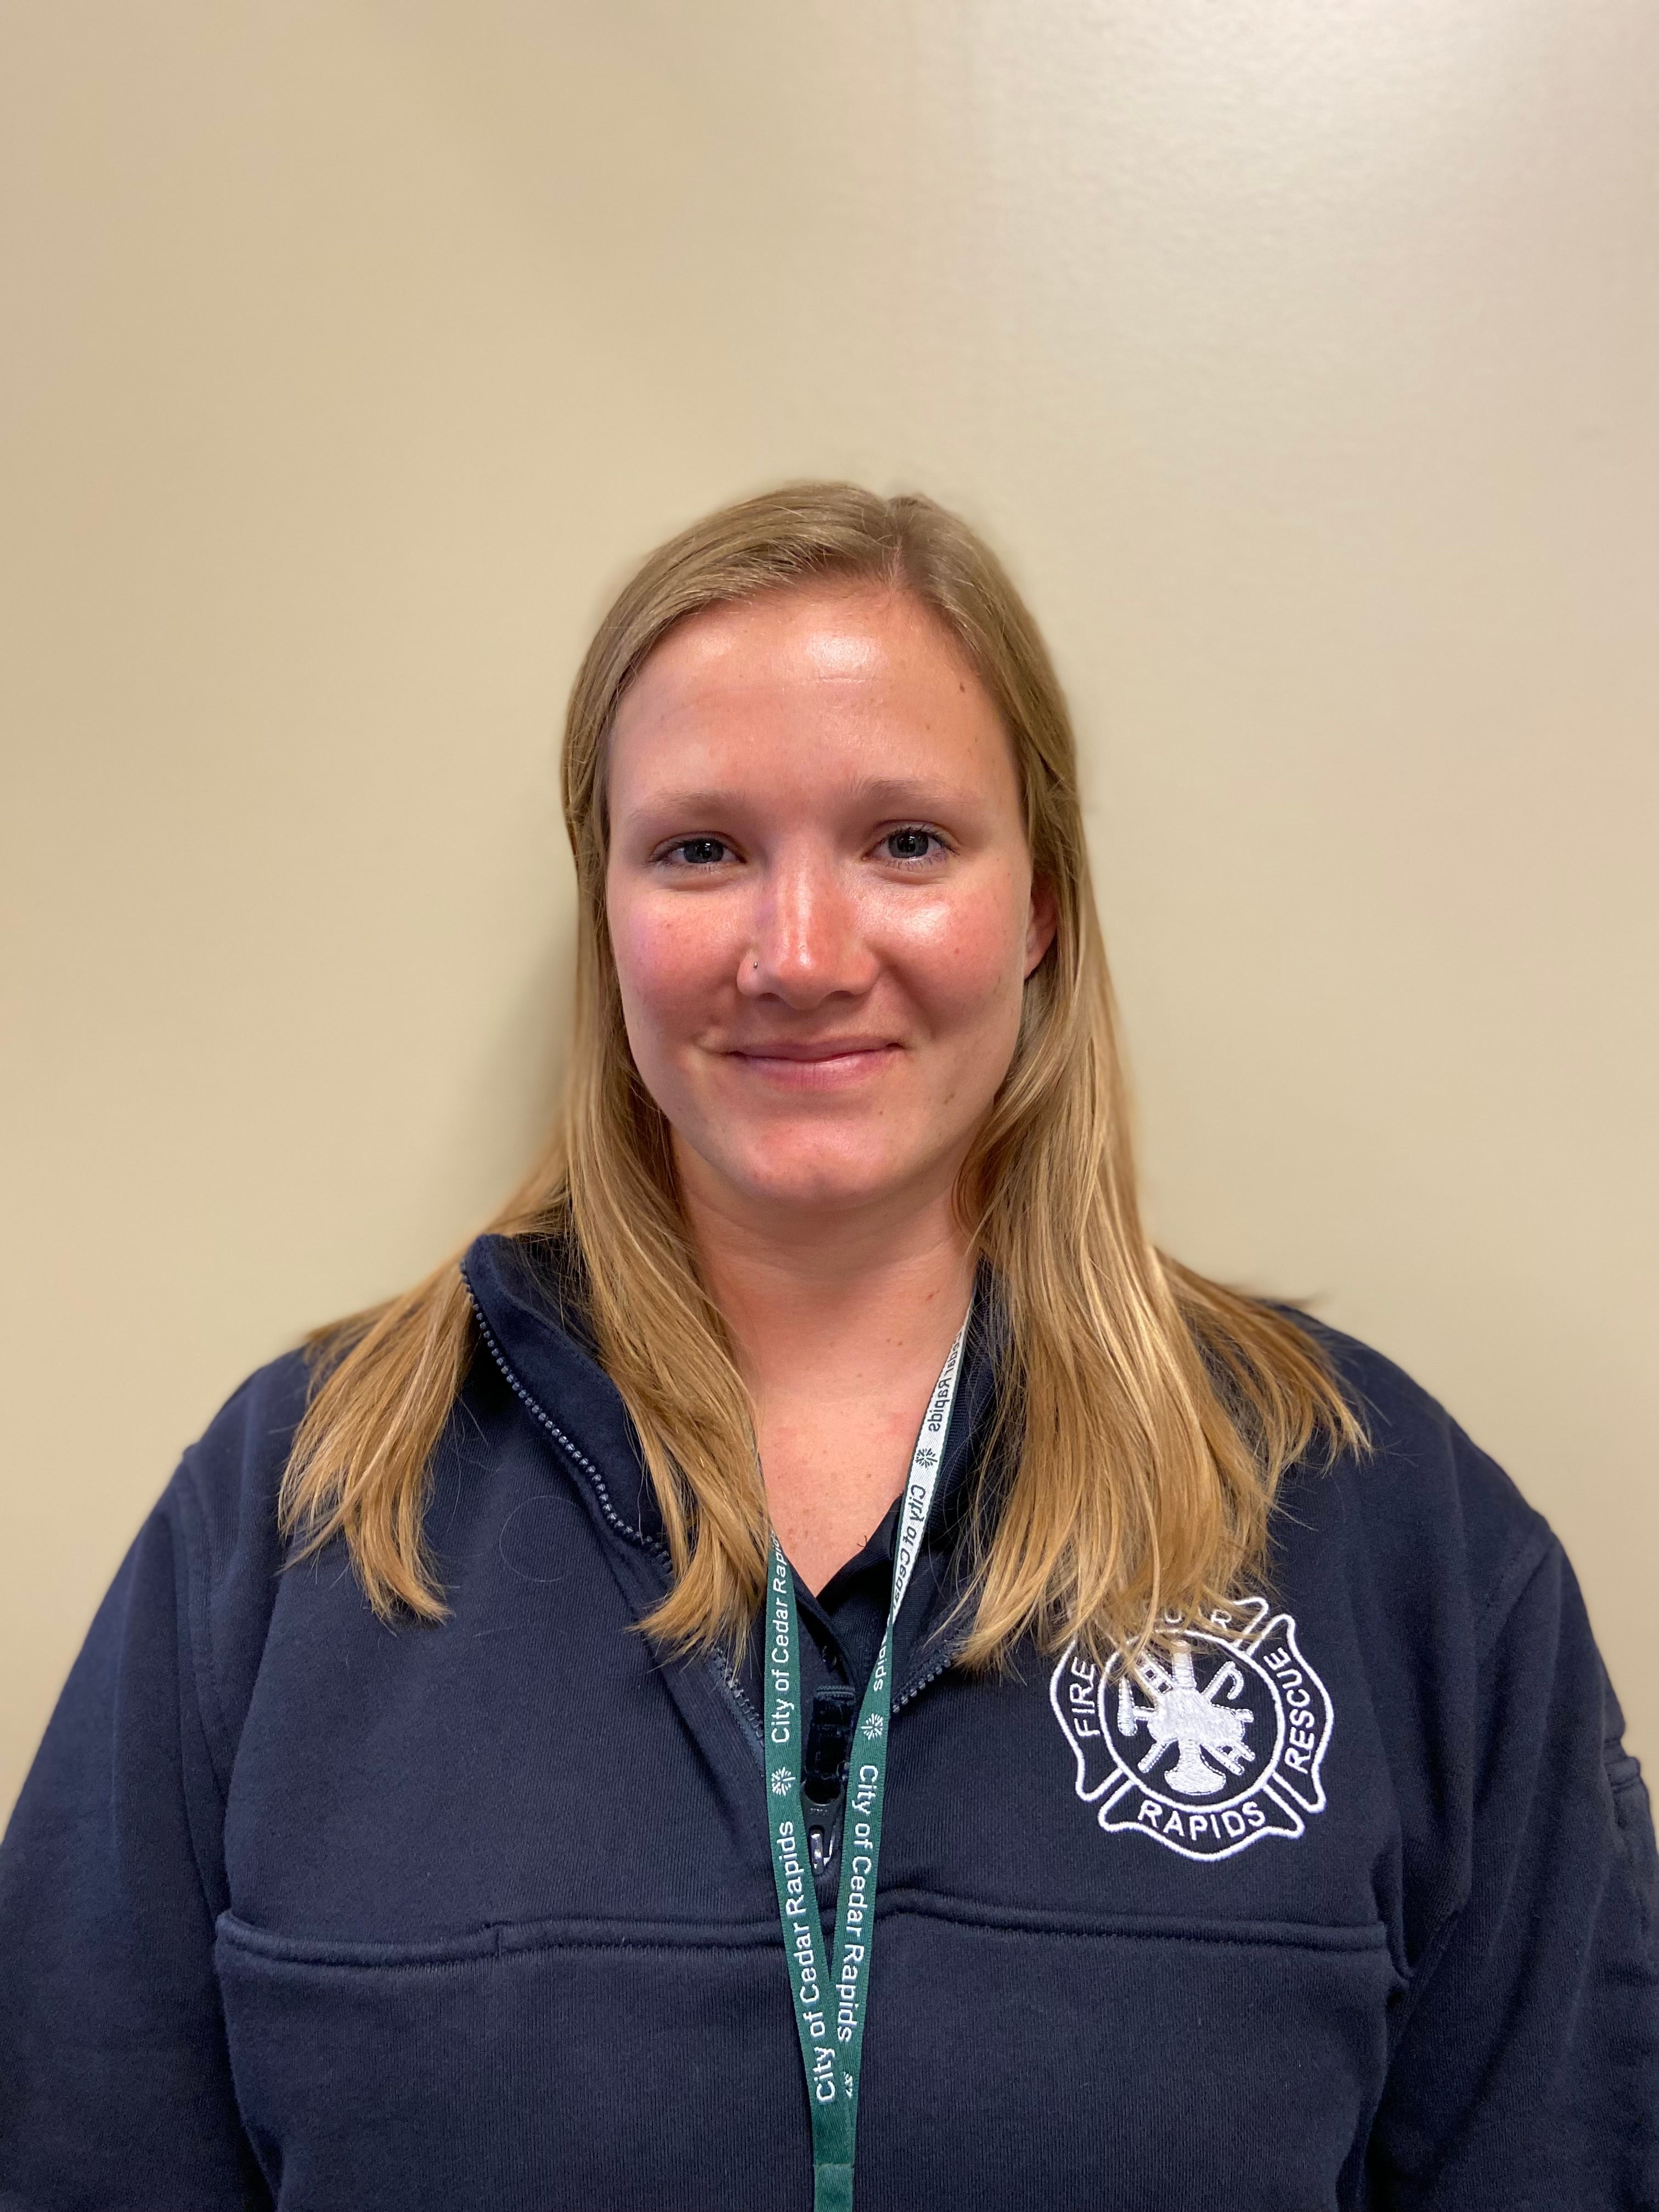 Sydney Henderson, Public Education Specialist at the Cedar Rapids Fire Department